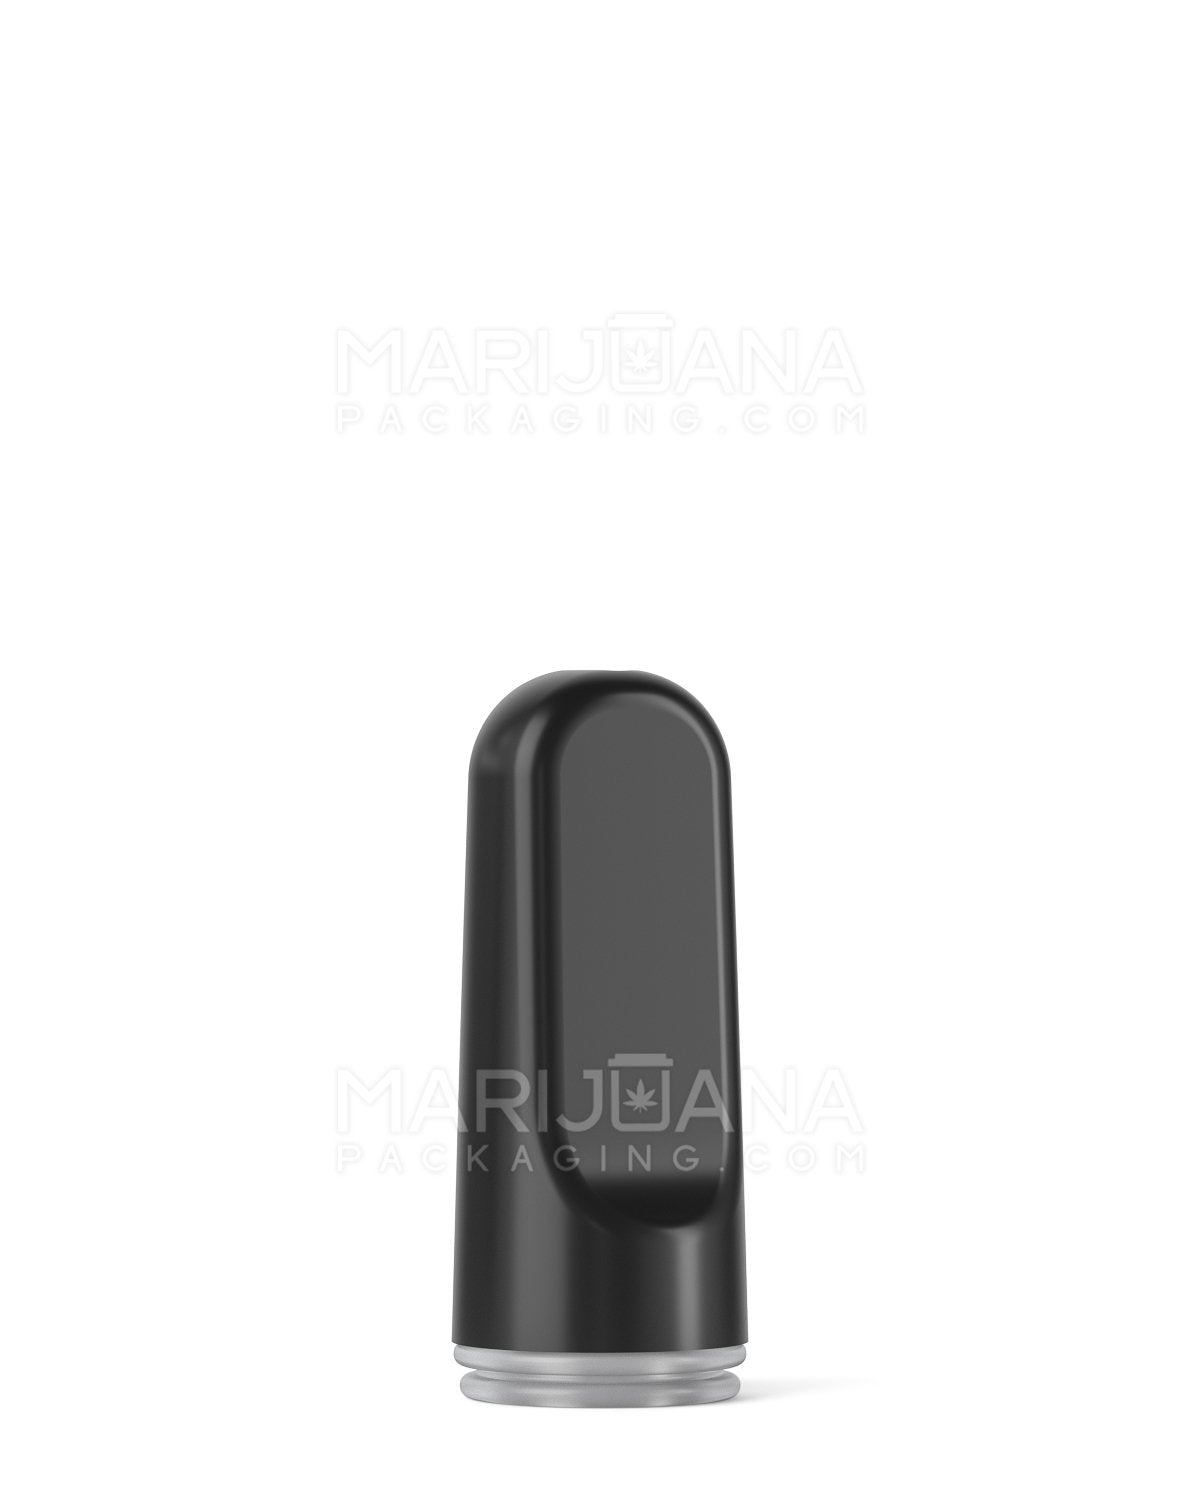 AVD | Flat Vape Mouthpiece for GoodCarts Glass Cartridges | Black Ceramic - Screw On - 600 Count - 2